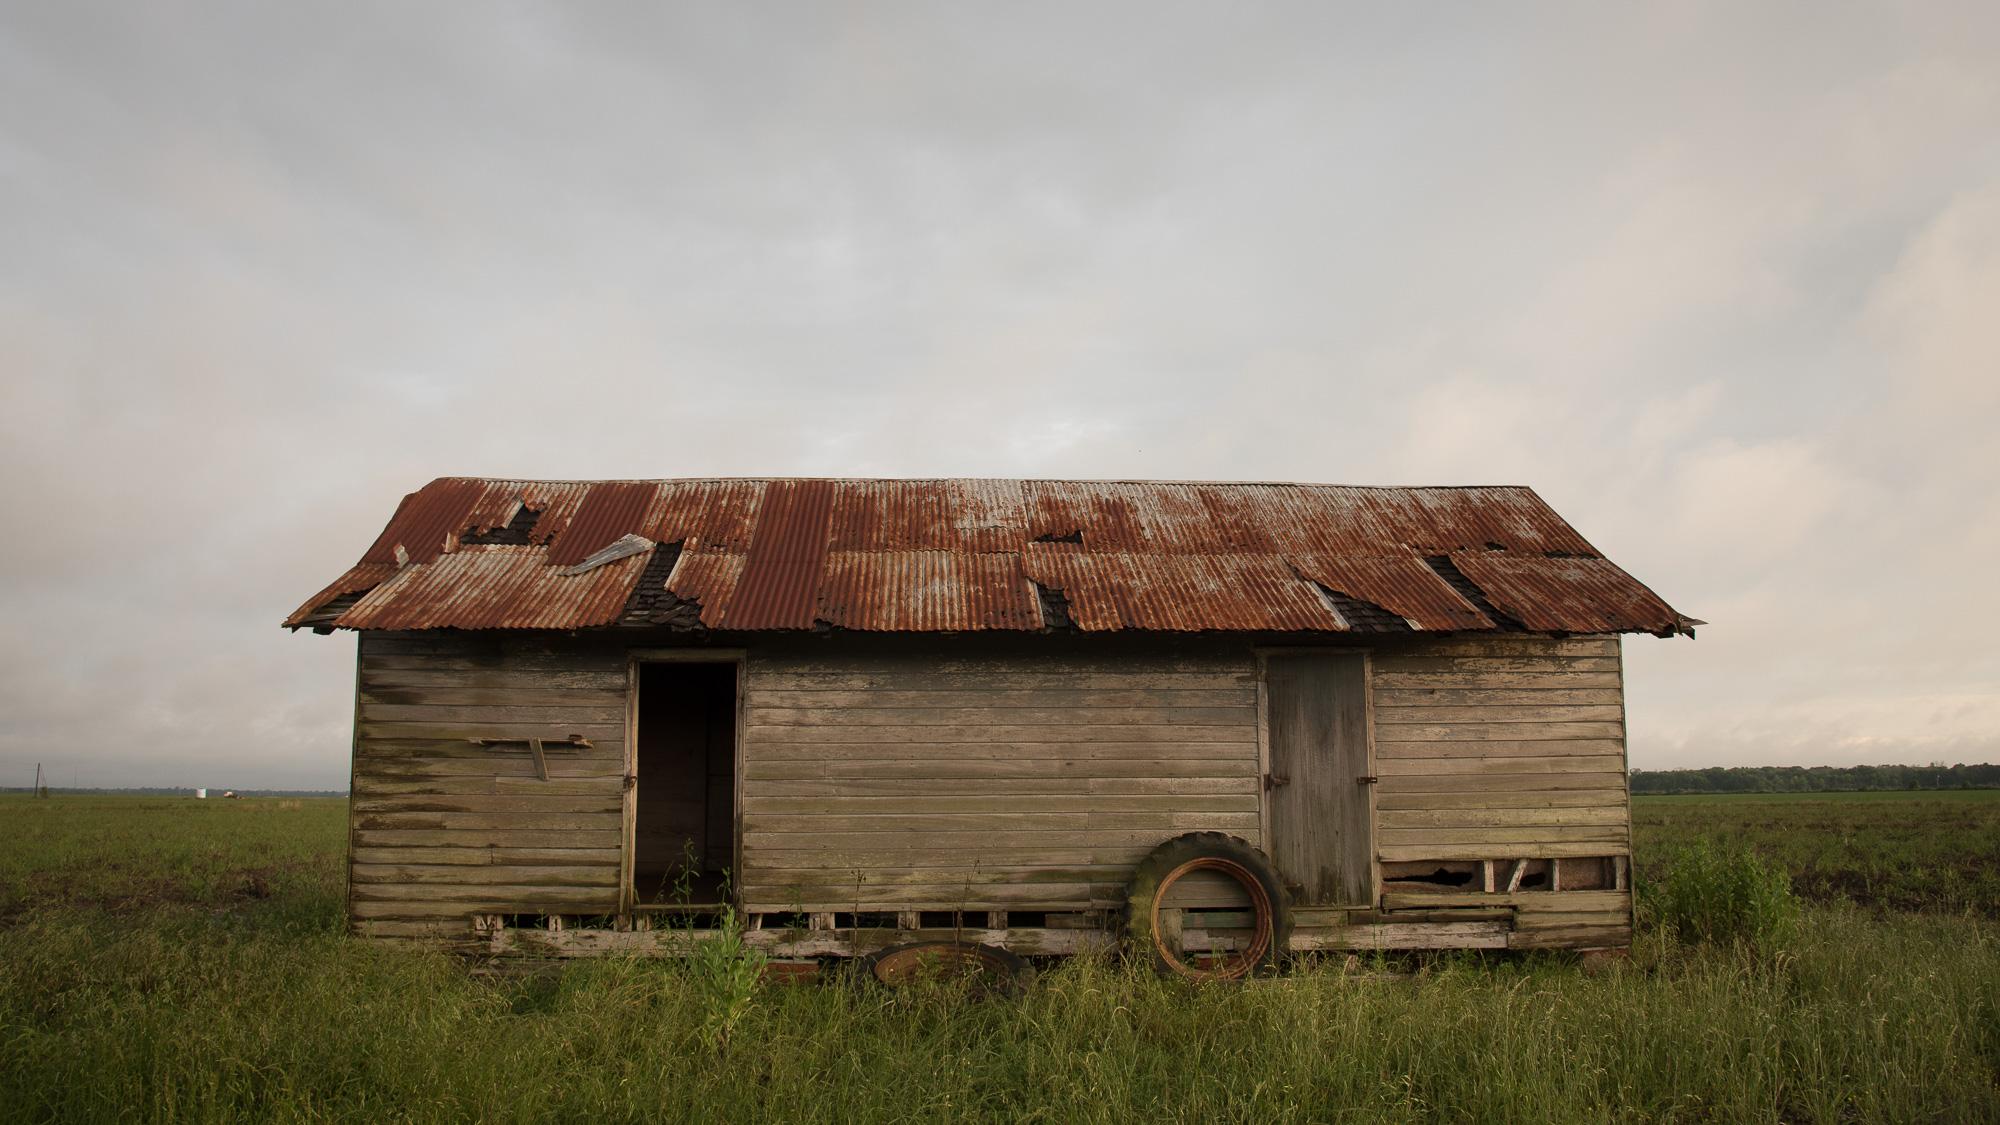  Late afternoon, Vacherie, Louisiana Former slave dwelling on a sugar cane plantation.&nbsp; 